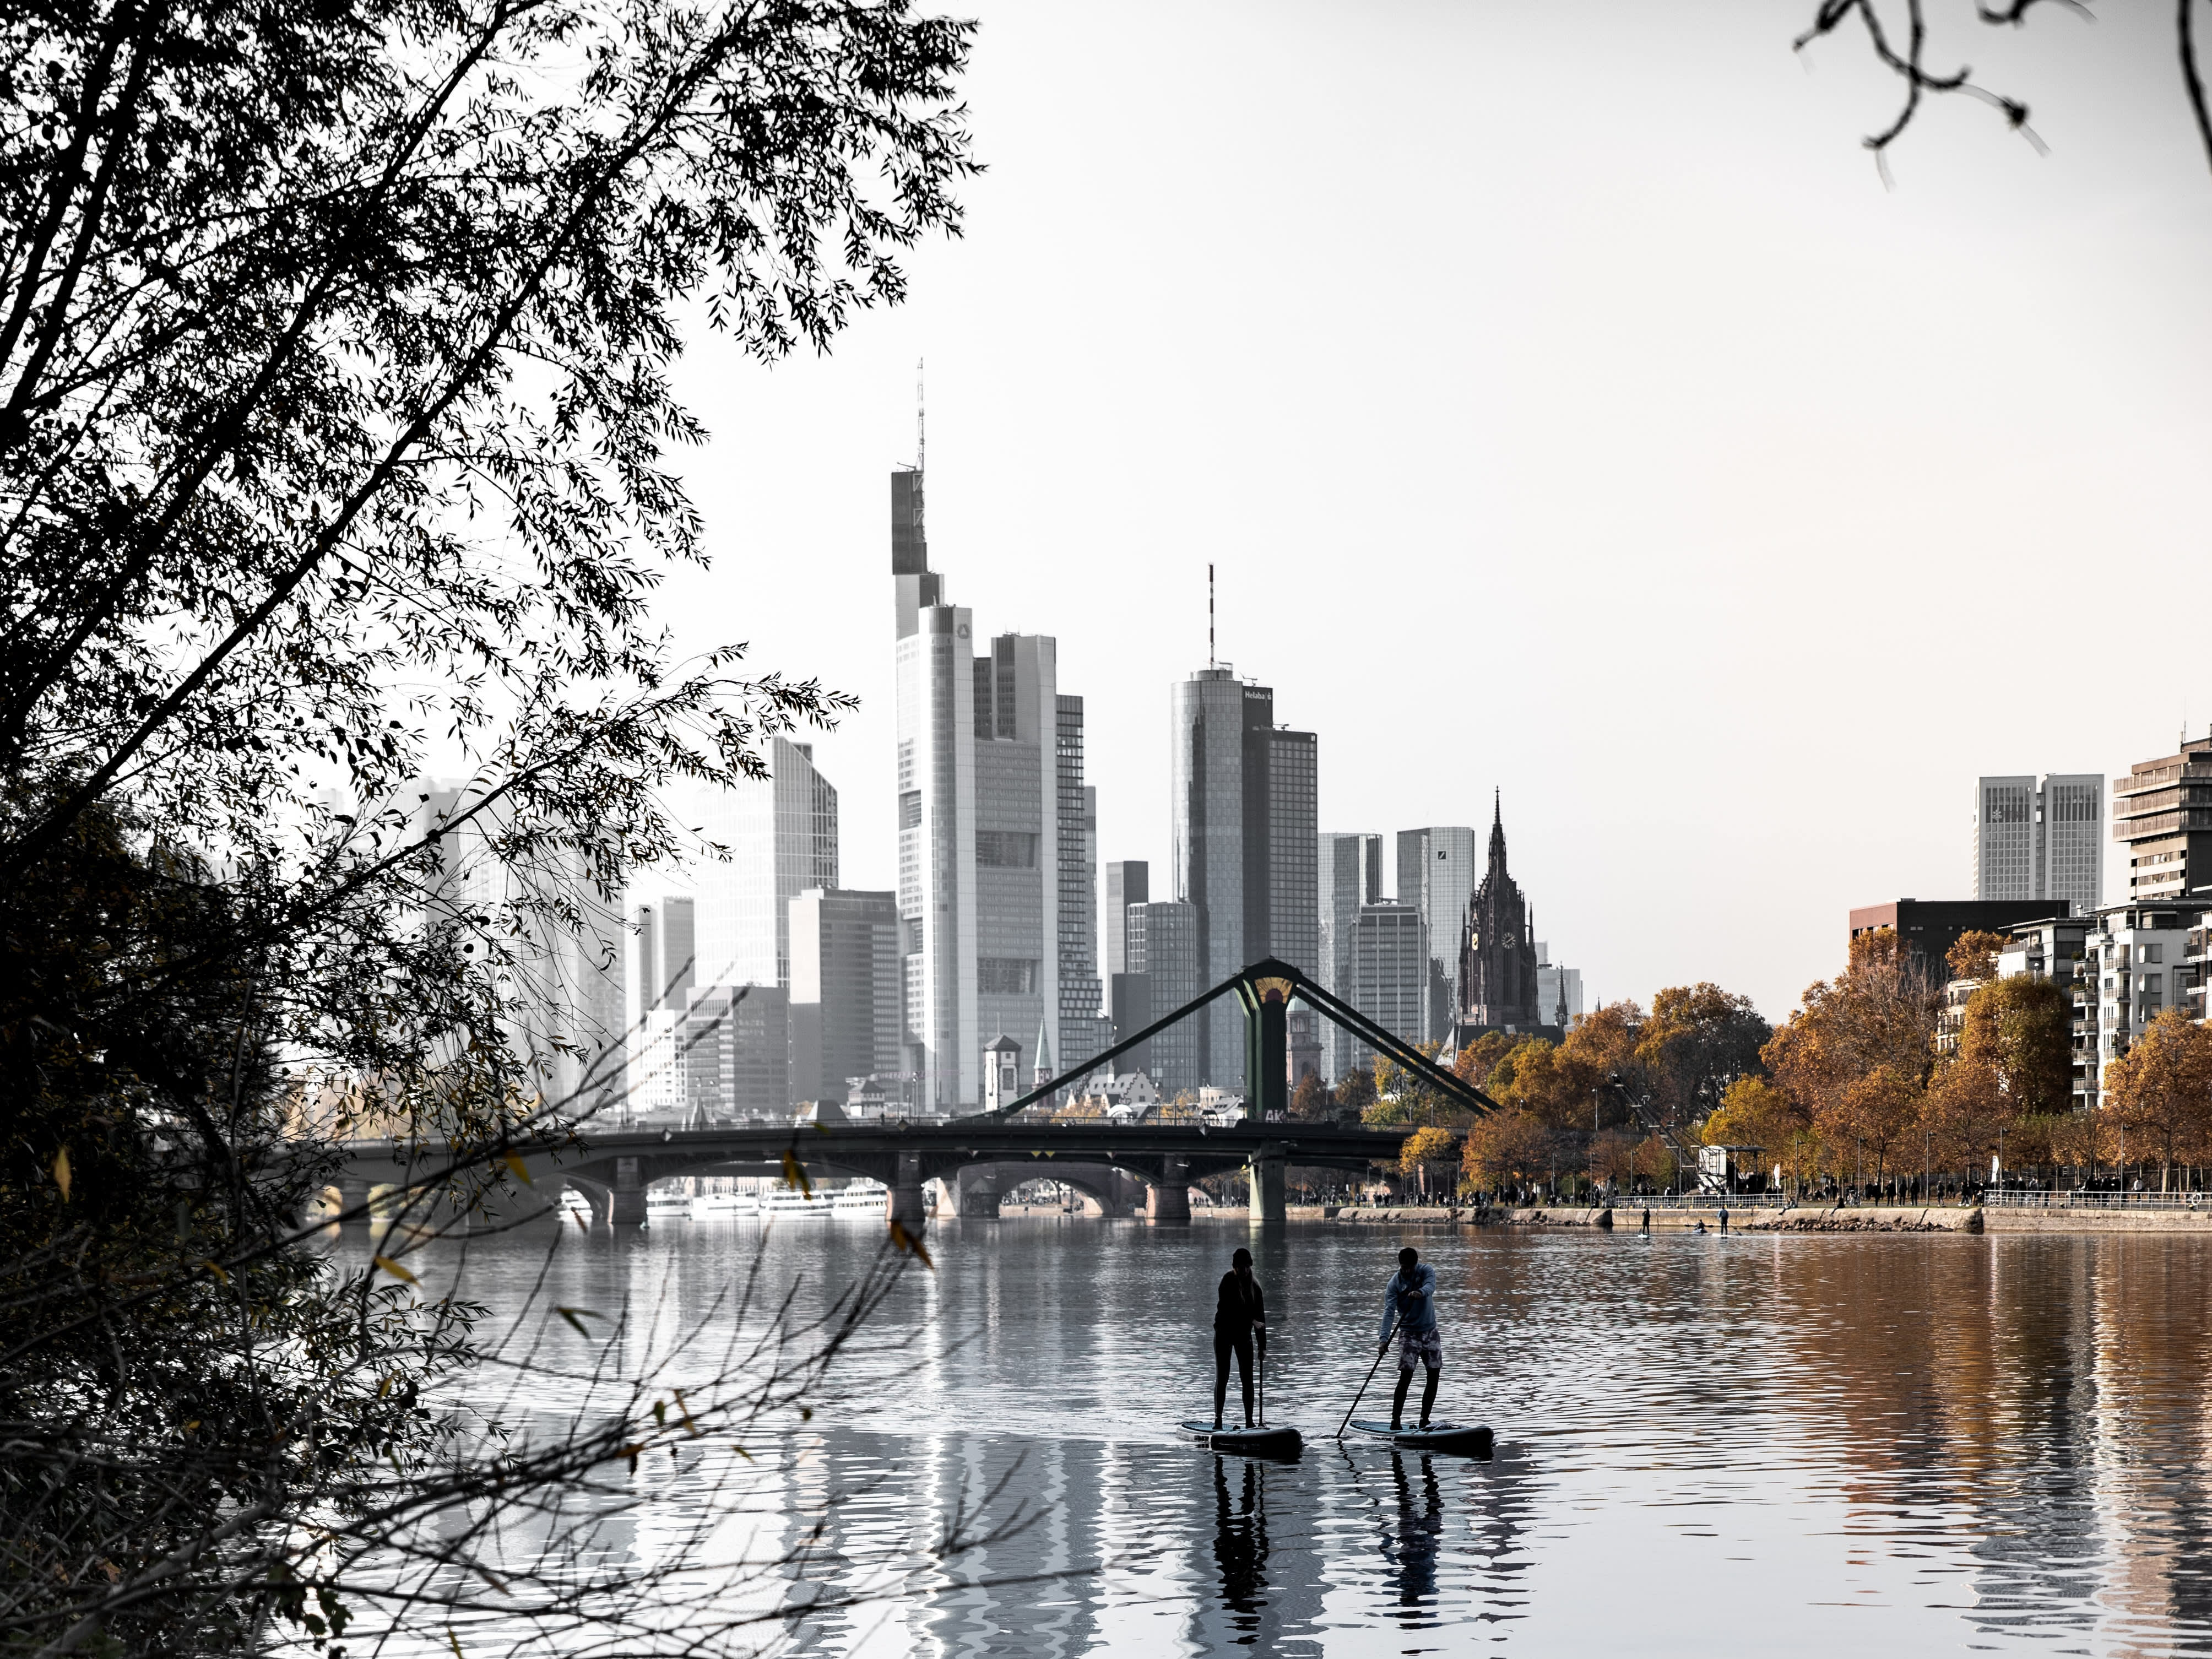 Register in Frankfurt: Step-by-step guide